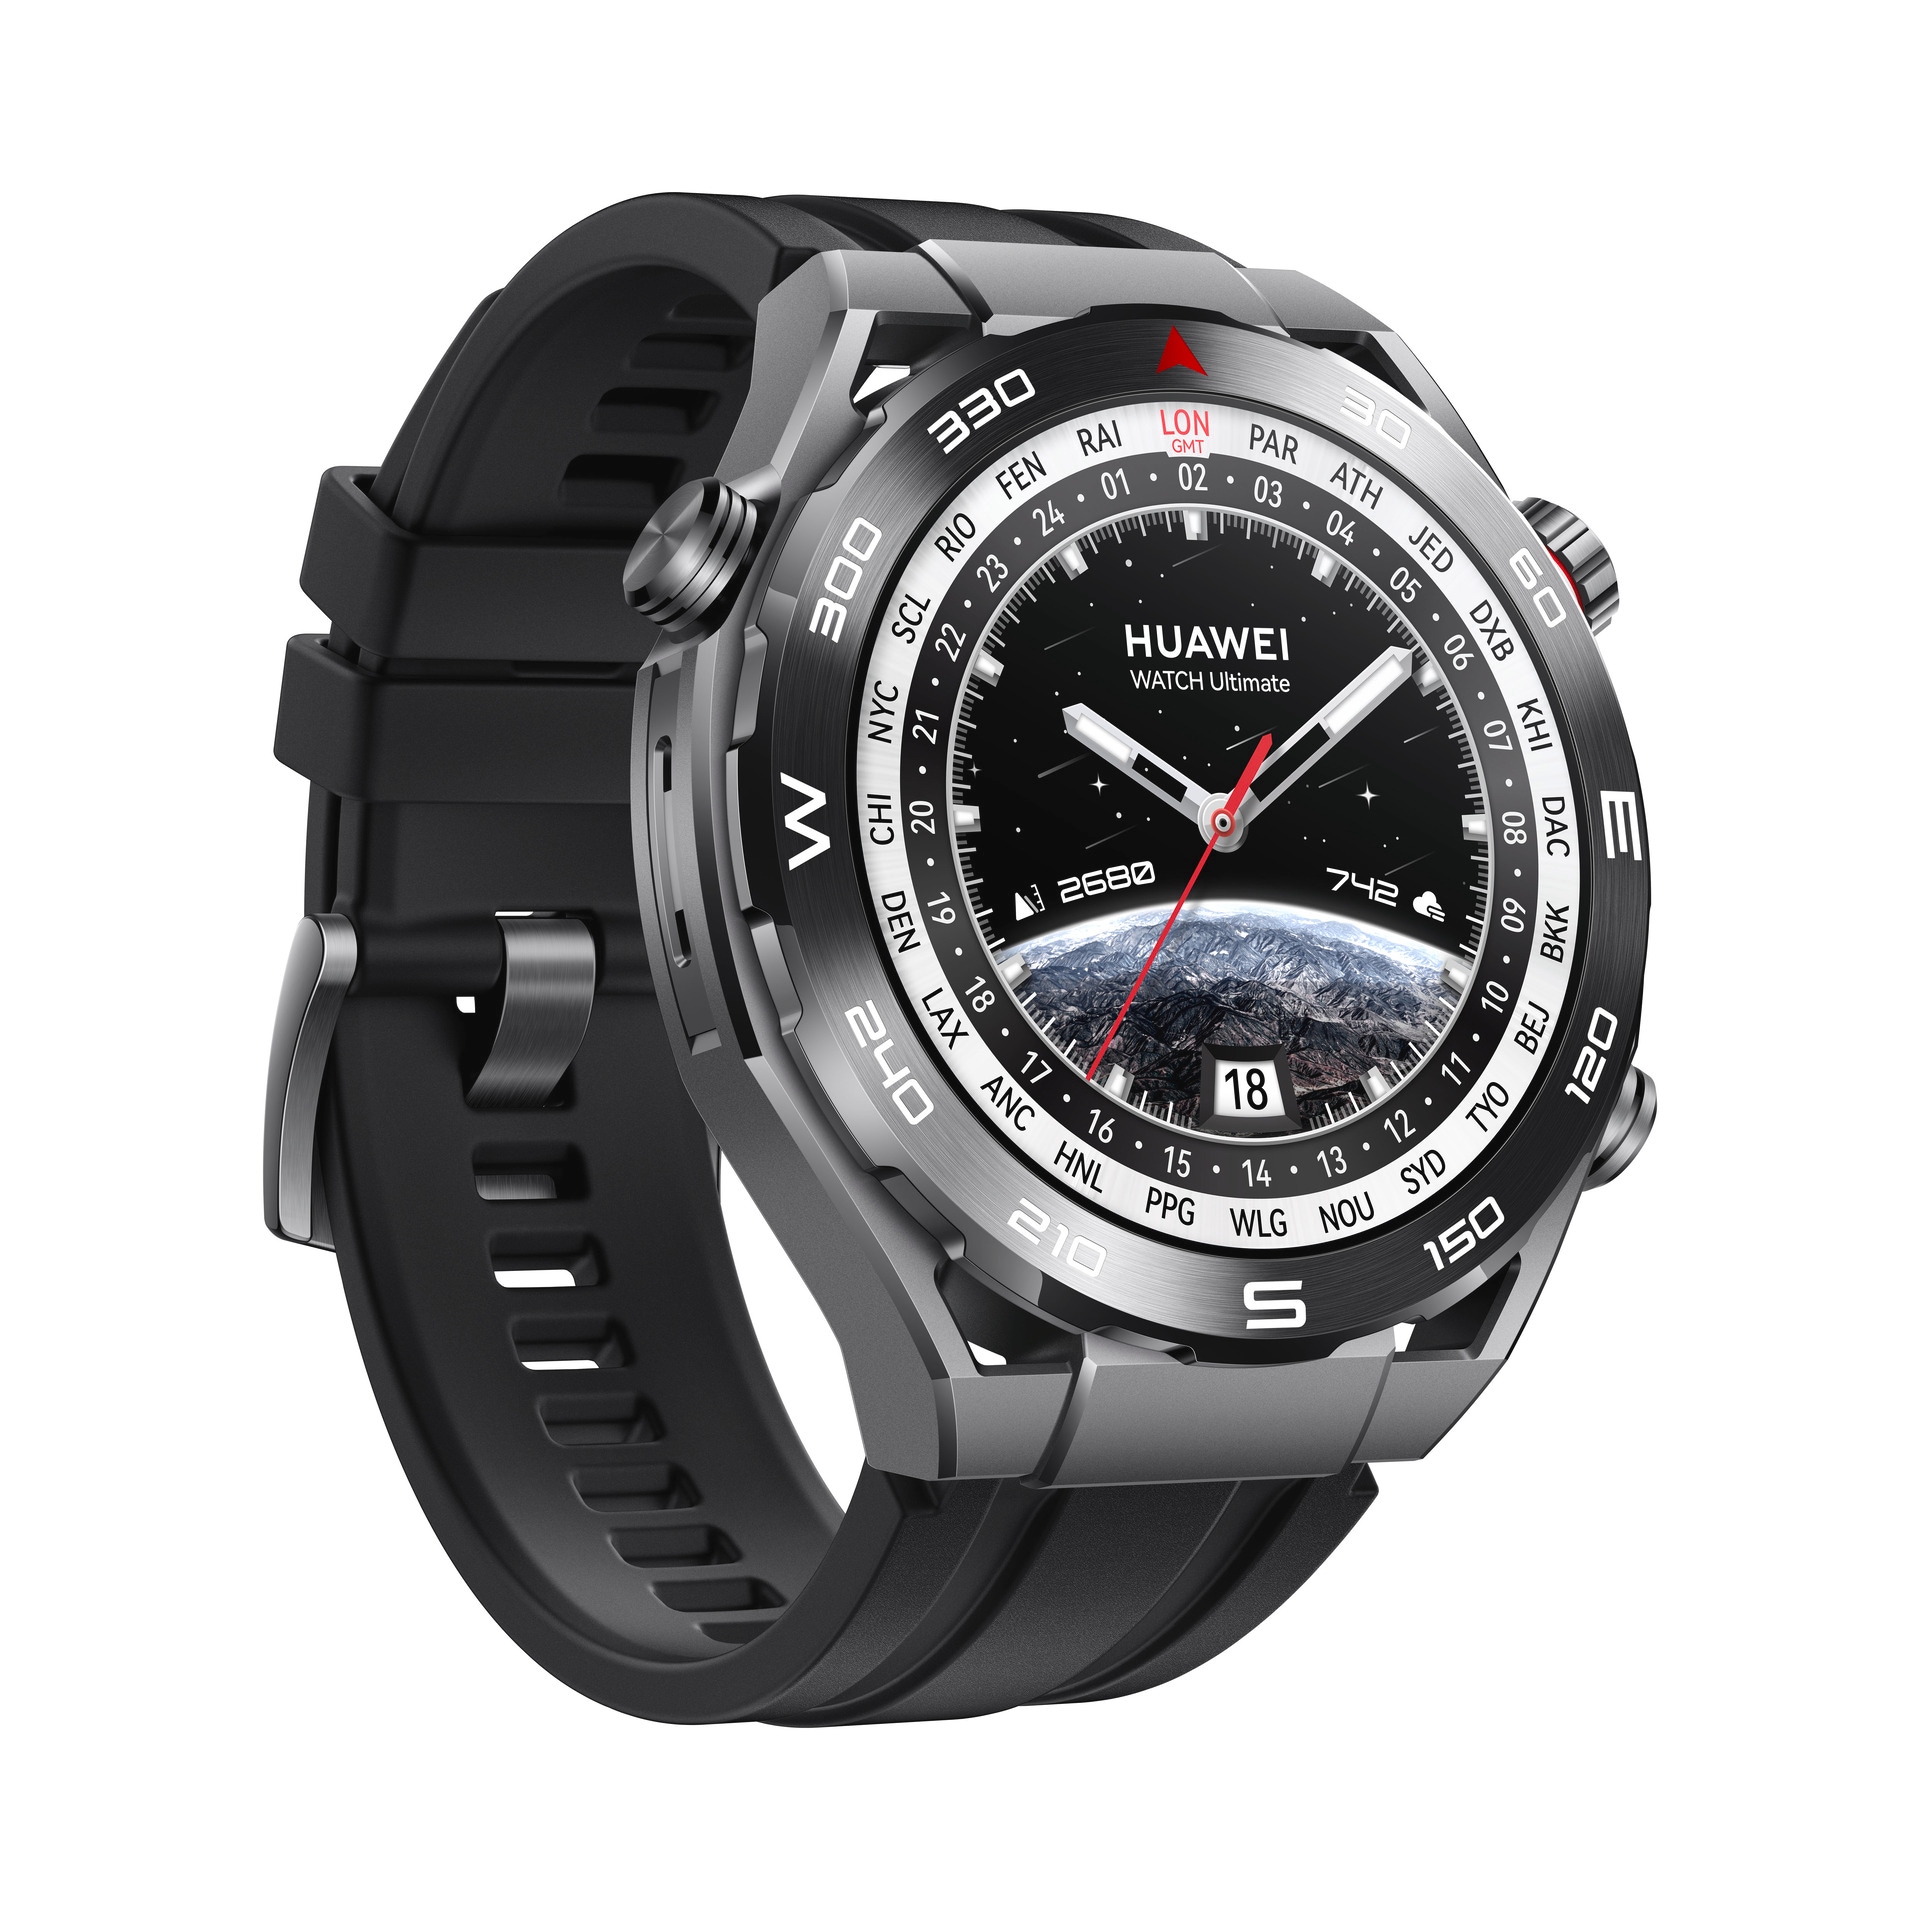 Huawei Smartwatch »Watch Ultimate«, UNIVERSAL (Proprietär) kaufen 